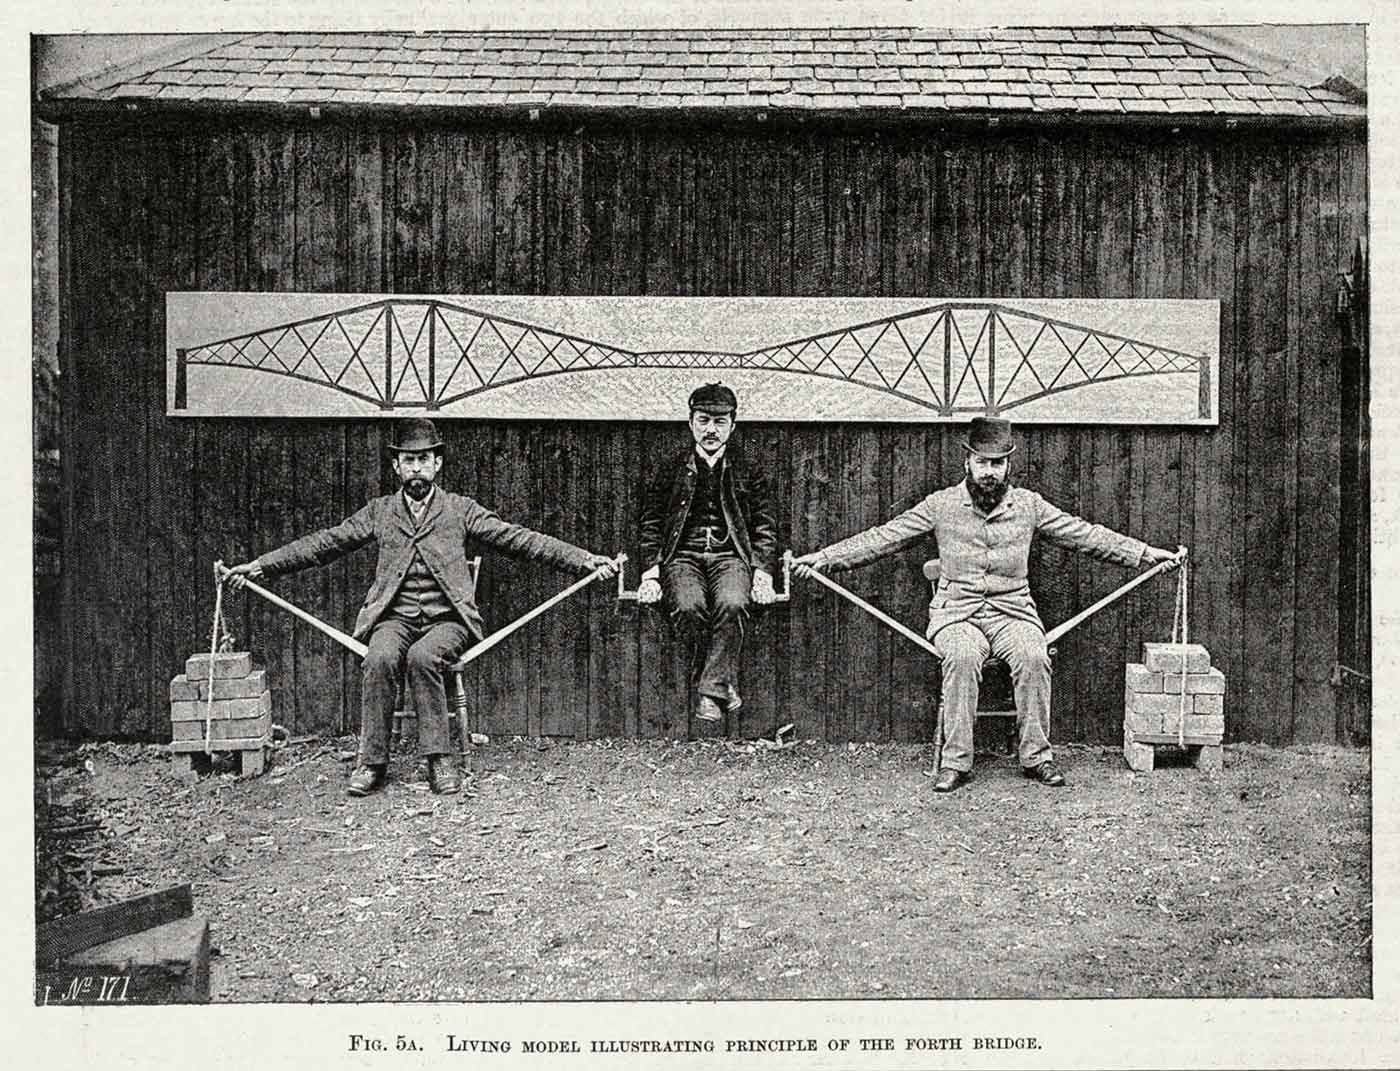 Postcard of Benjamin Baker's human cantilever bridge model.